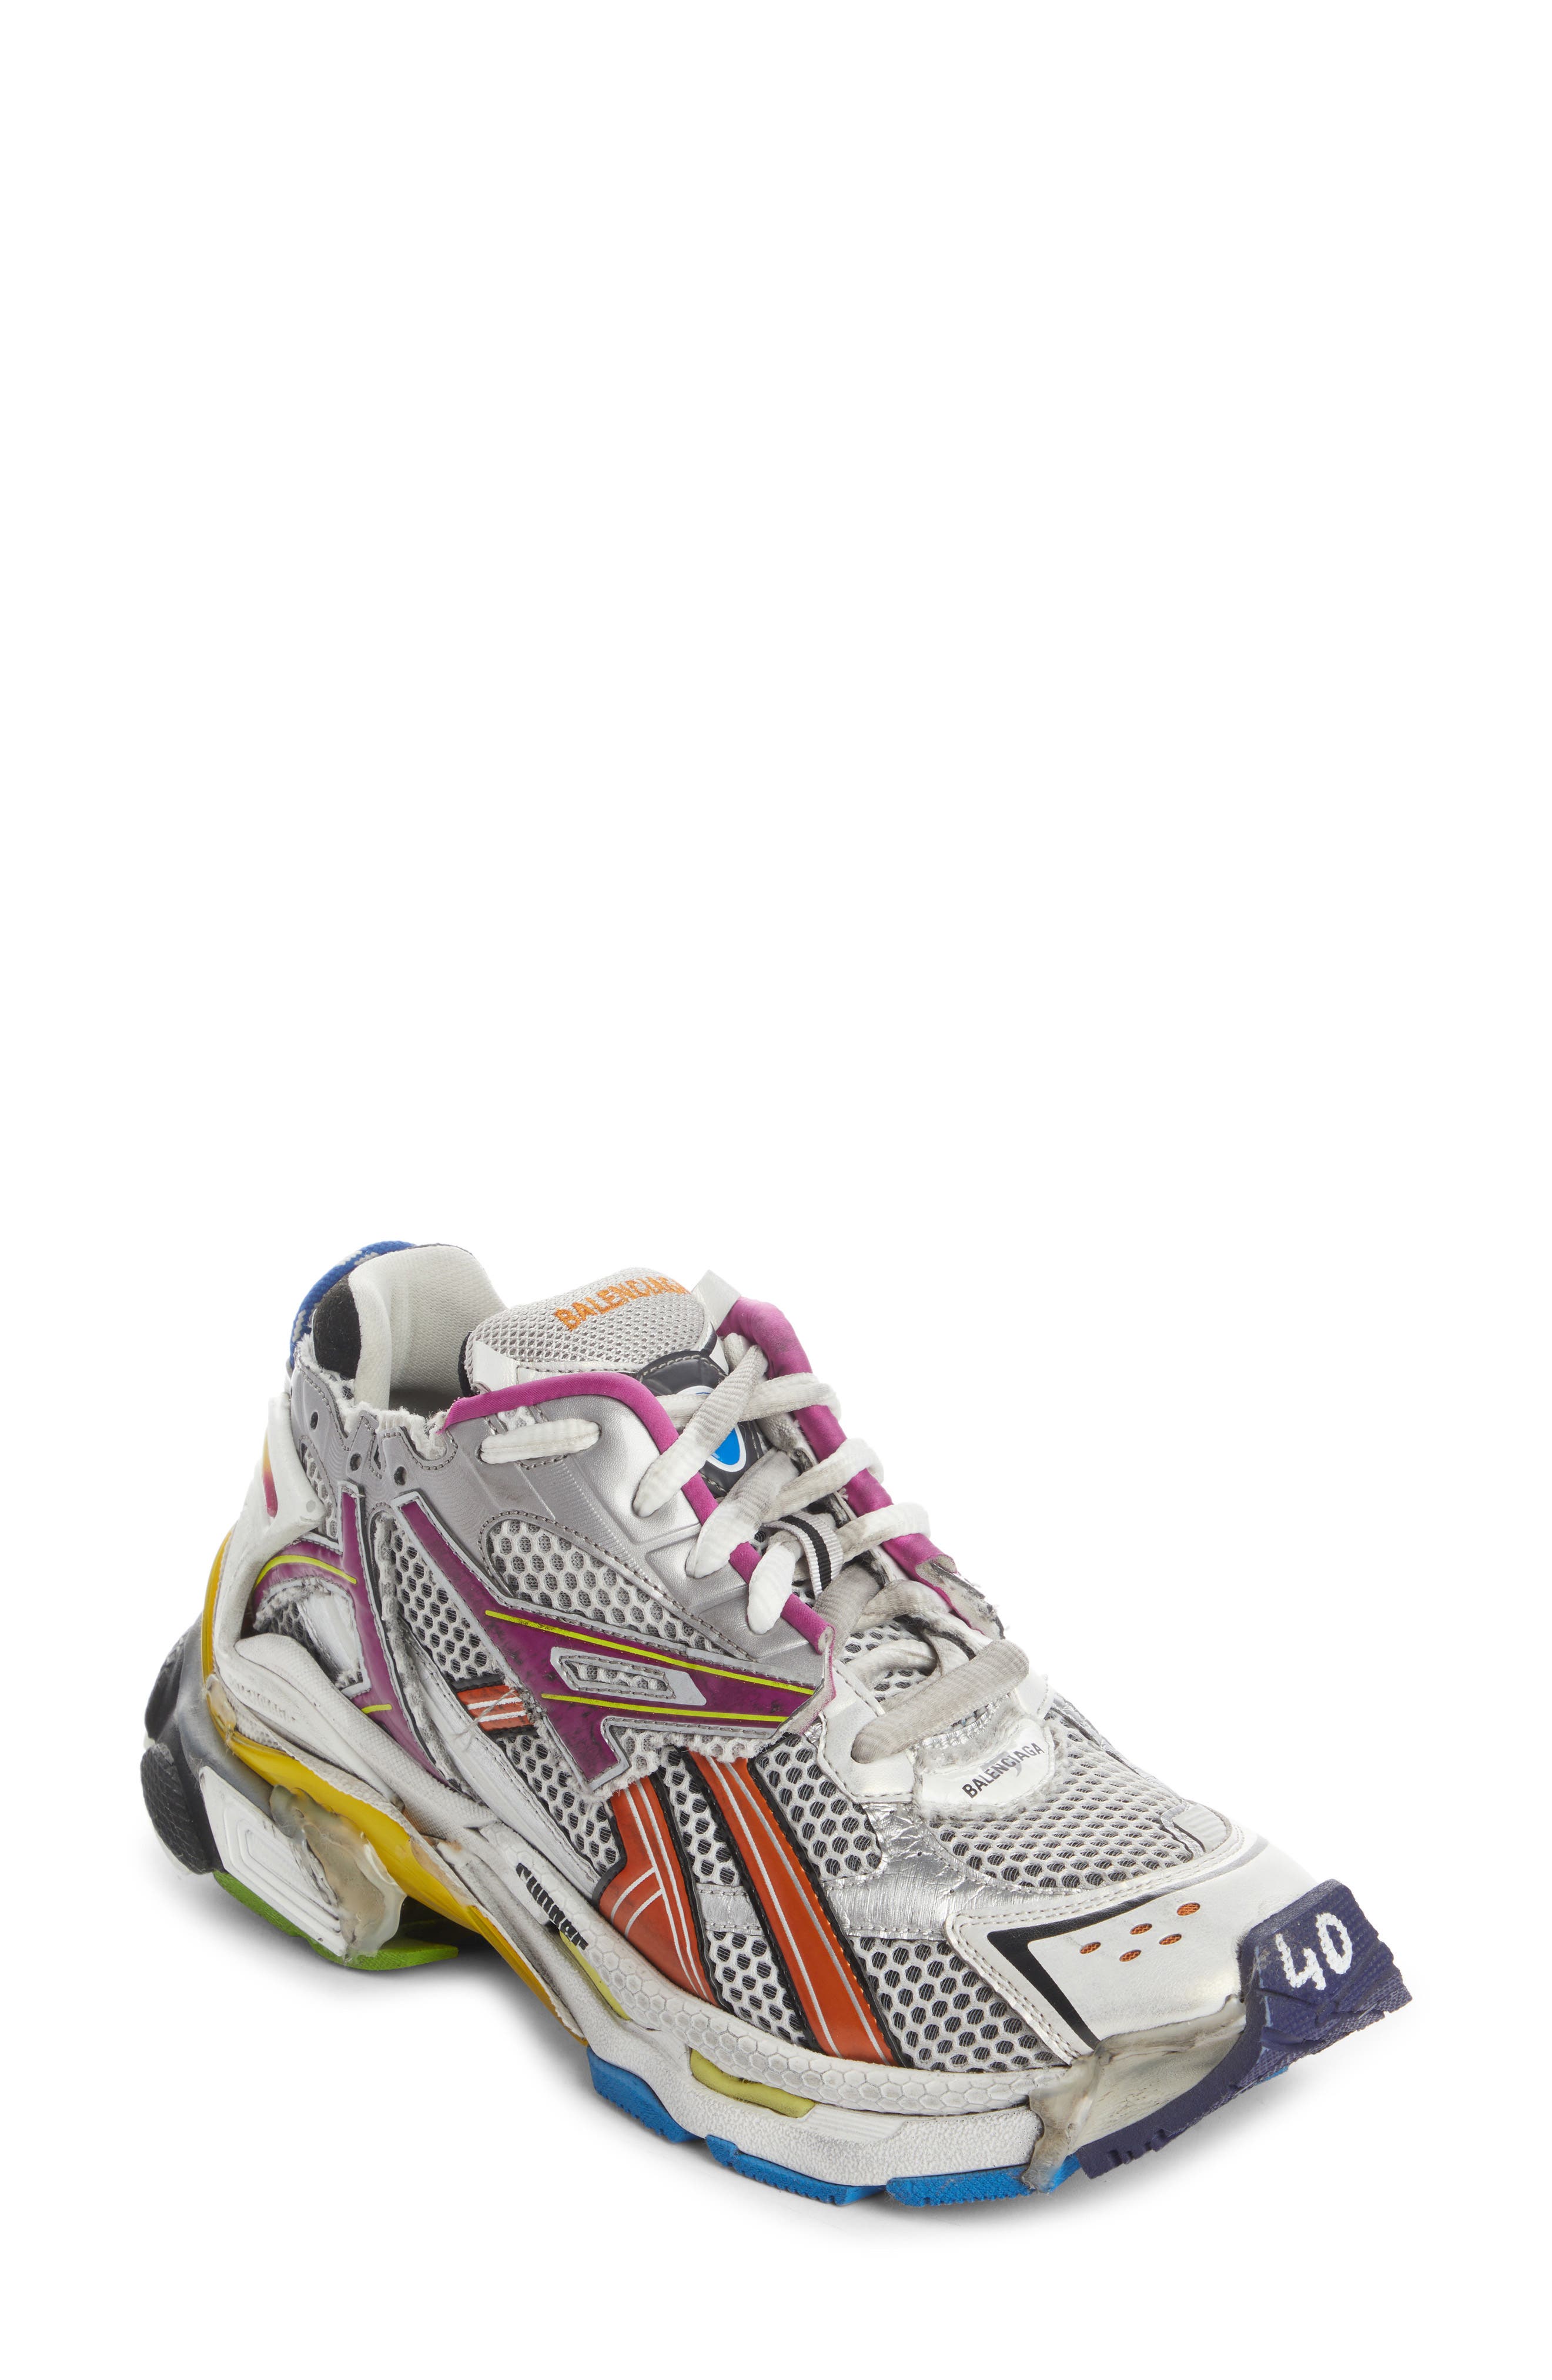 Balenciaga Runner Sneaker in Multicolor at Nordstrom, Size 6Us